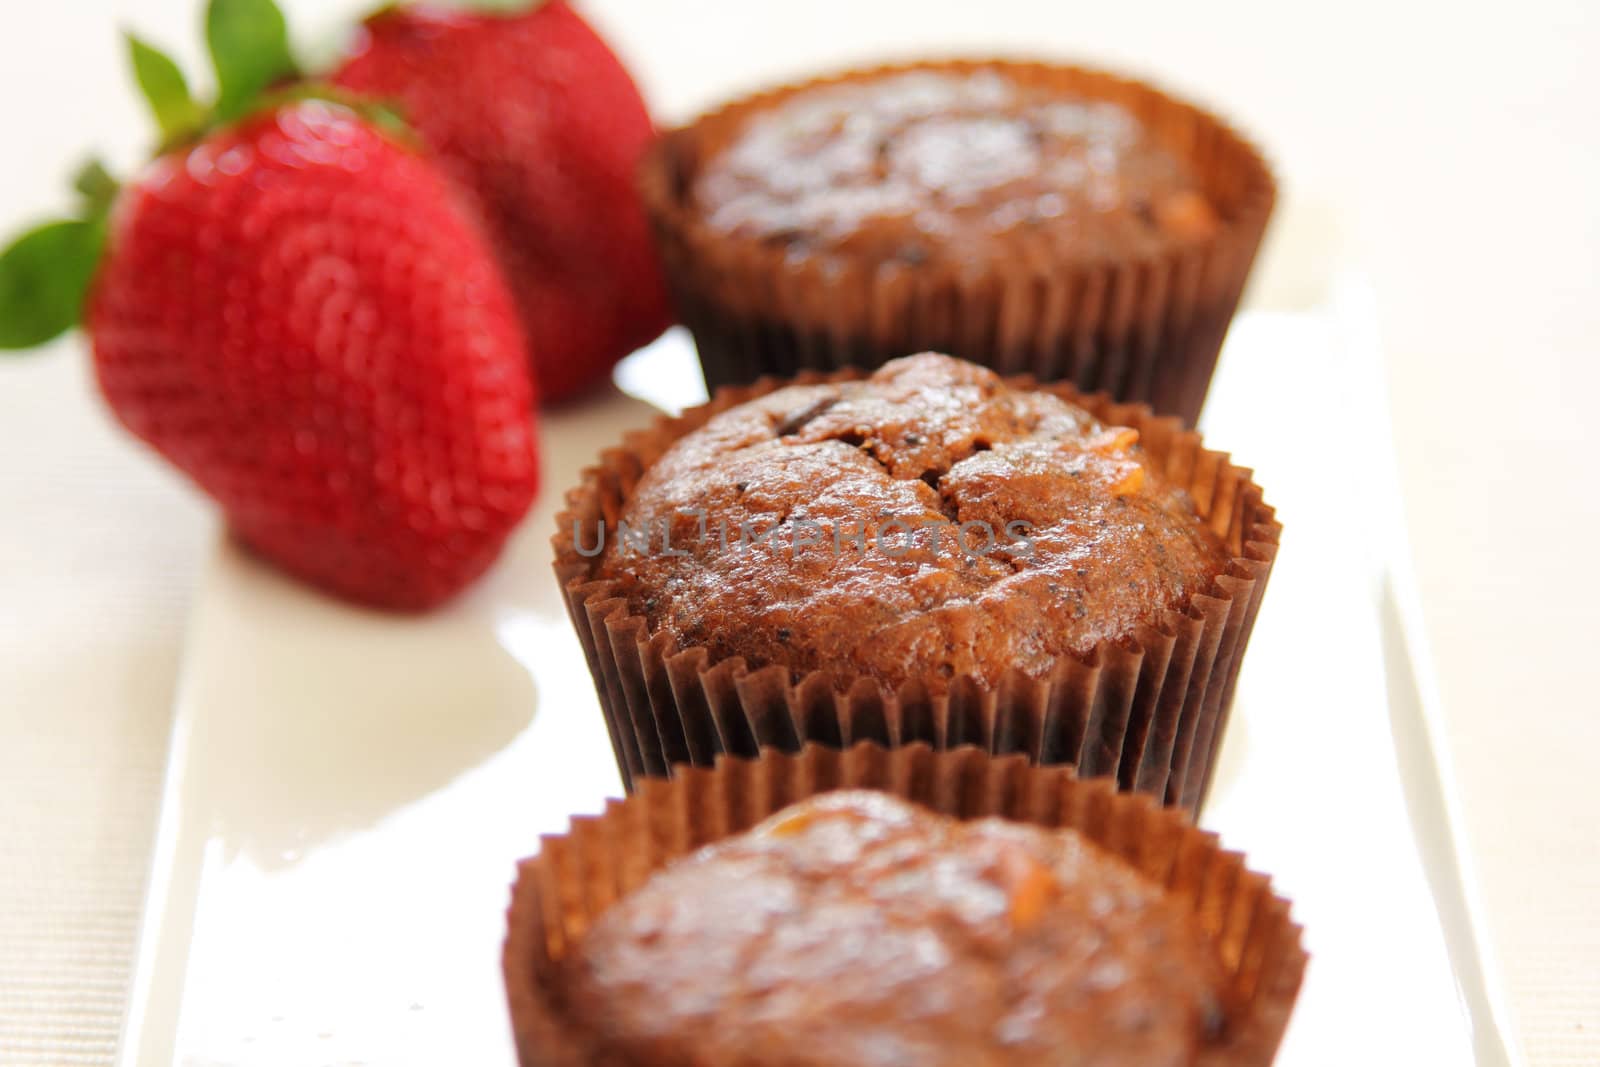 Chocolate cupcake with fresh strawberry